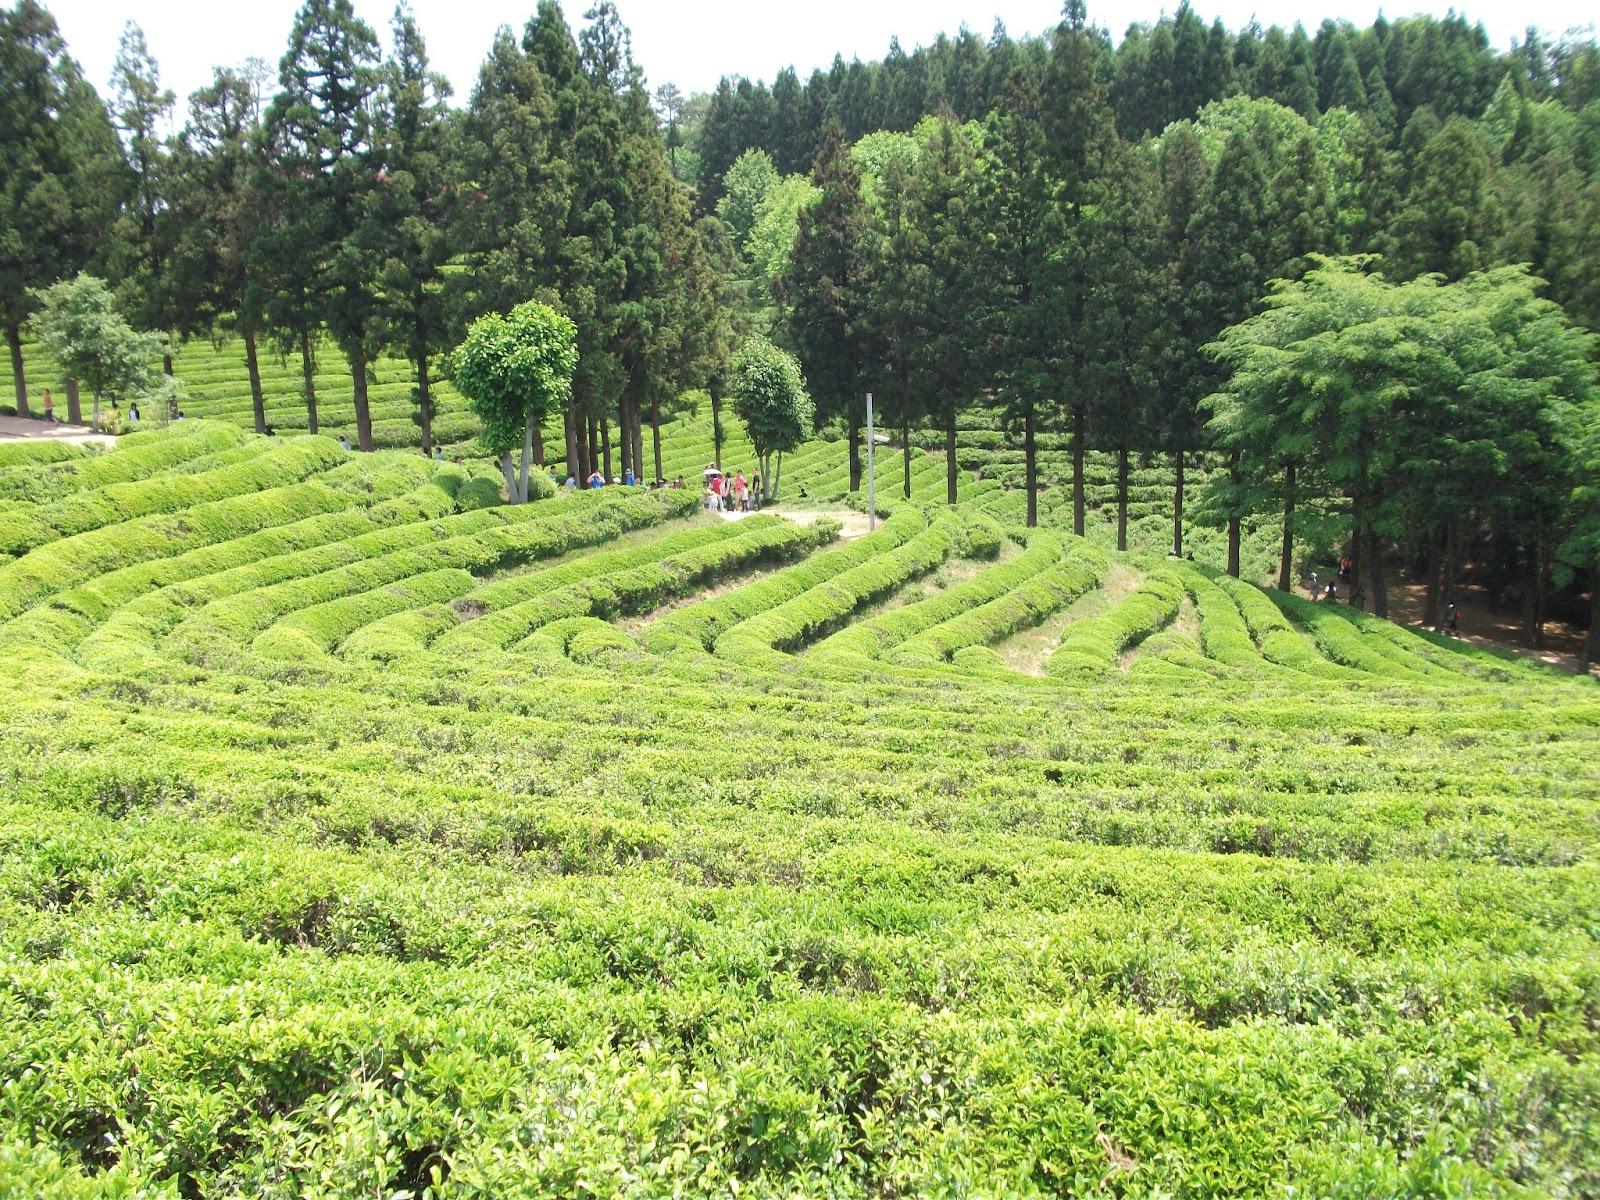 Boseong Green Tea Gardens And Damyang Babmboo Forest